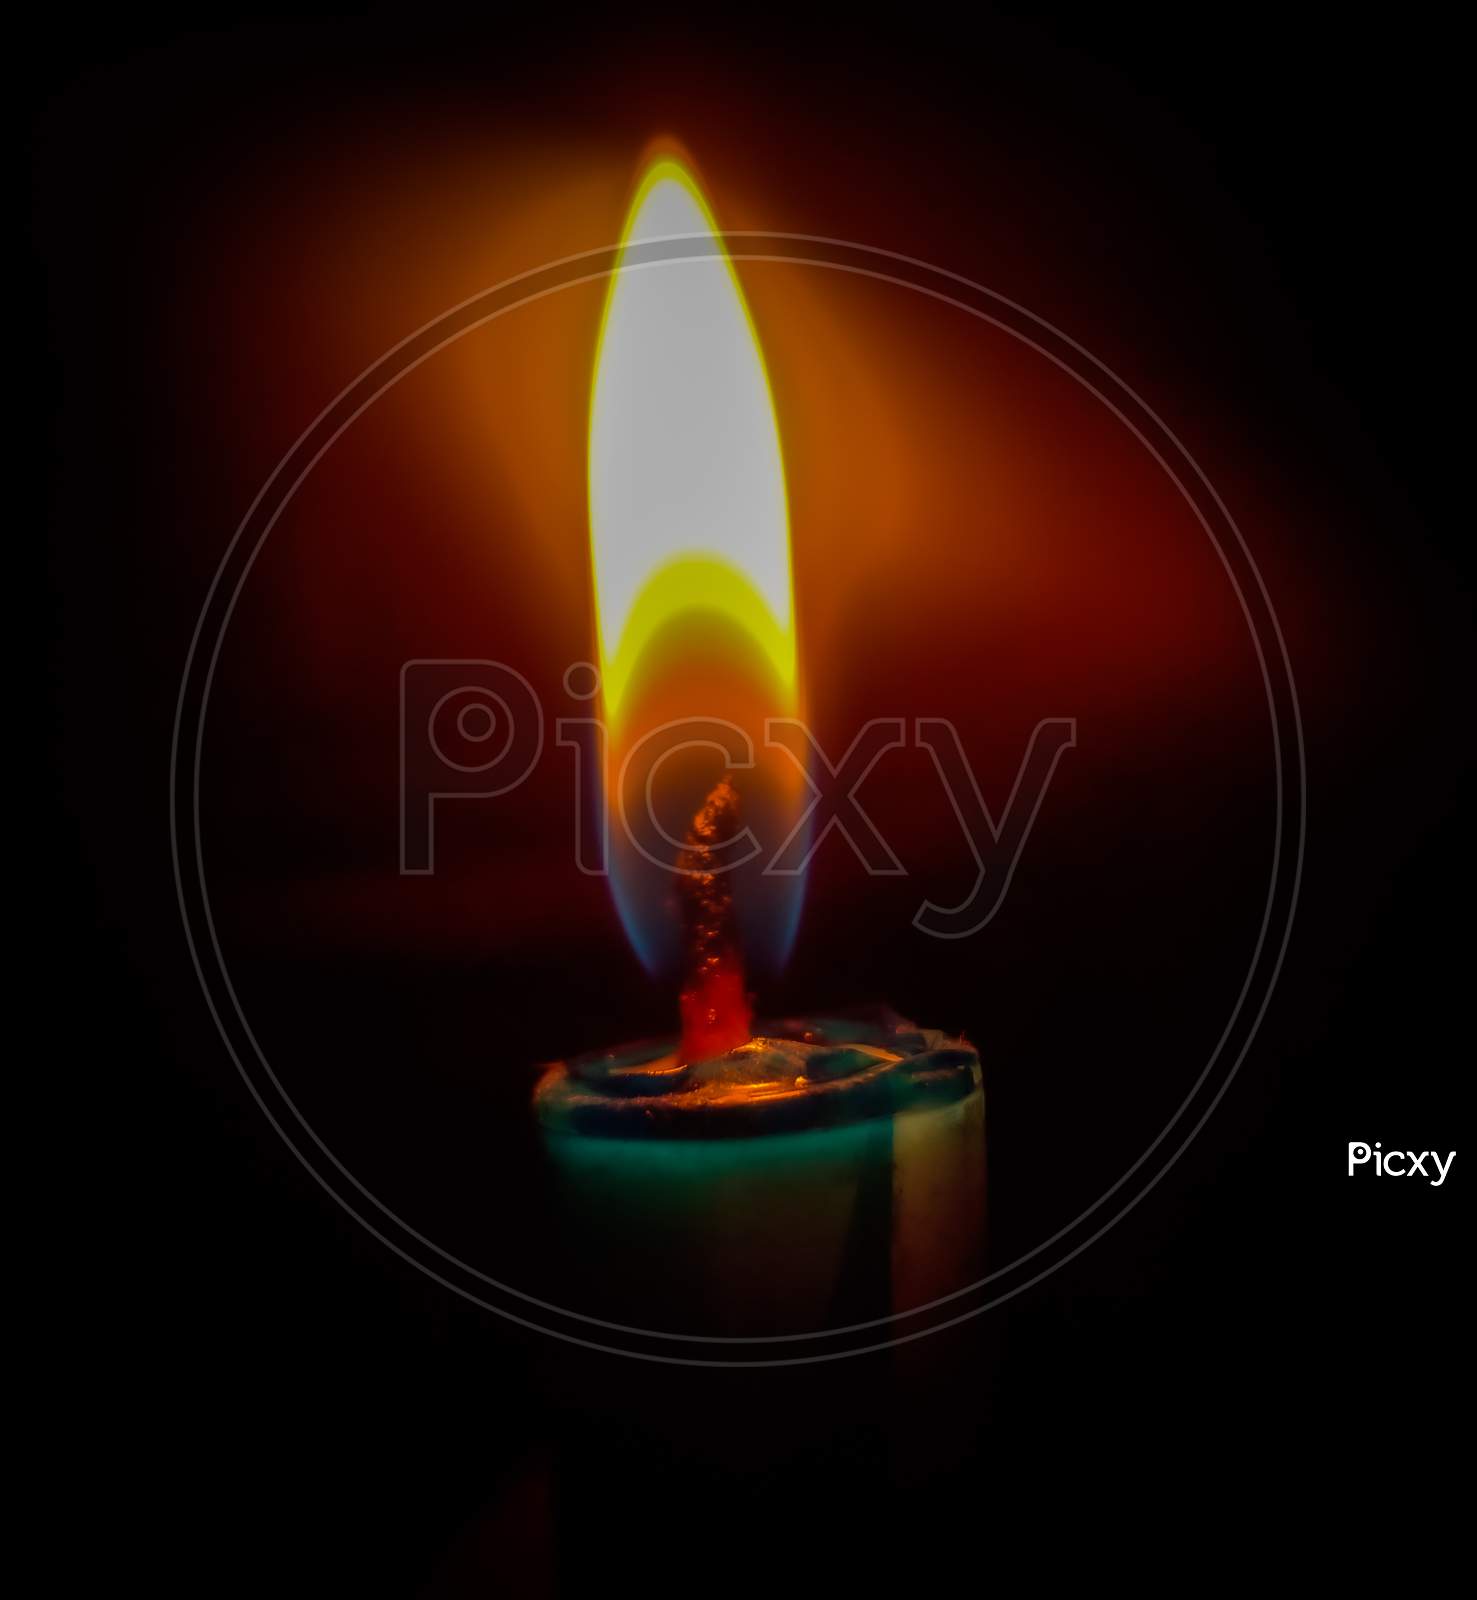 A burning candle